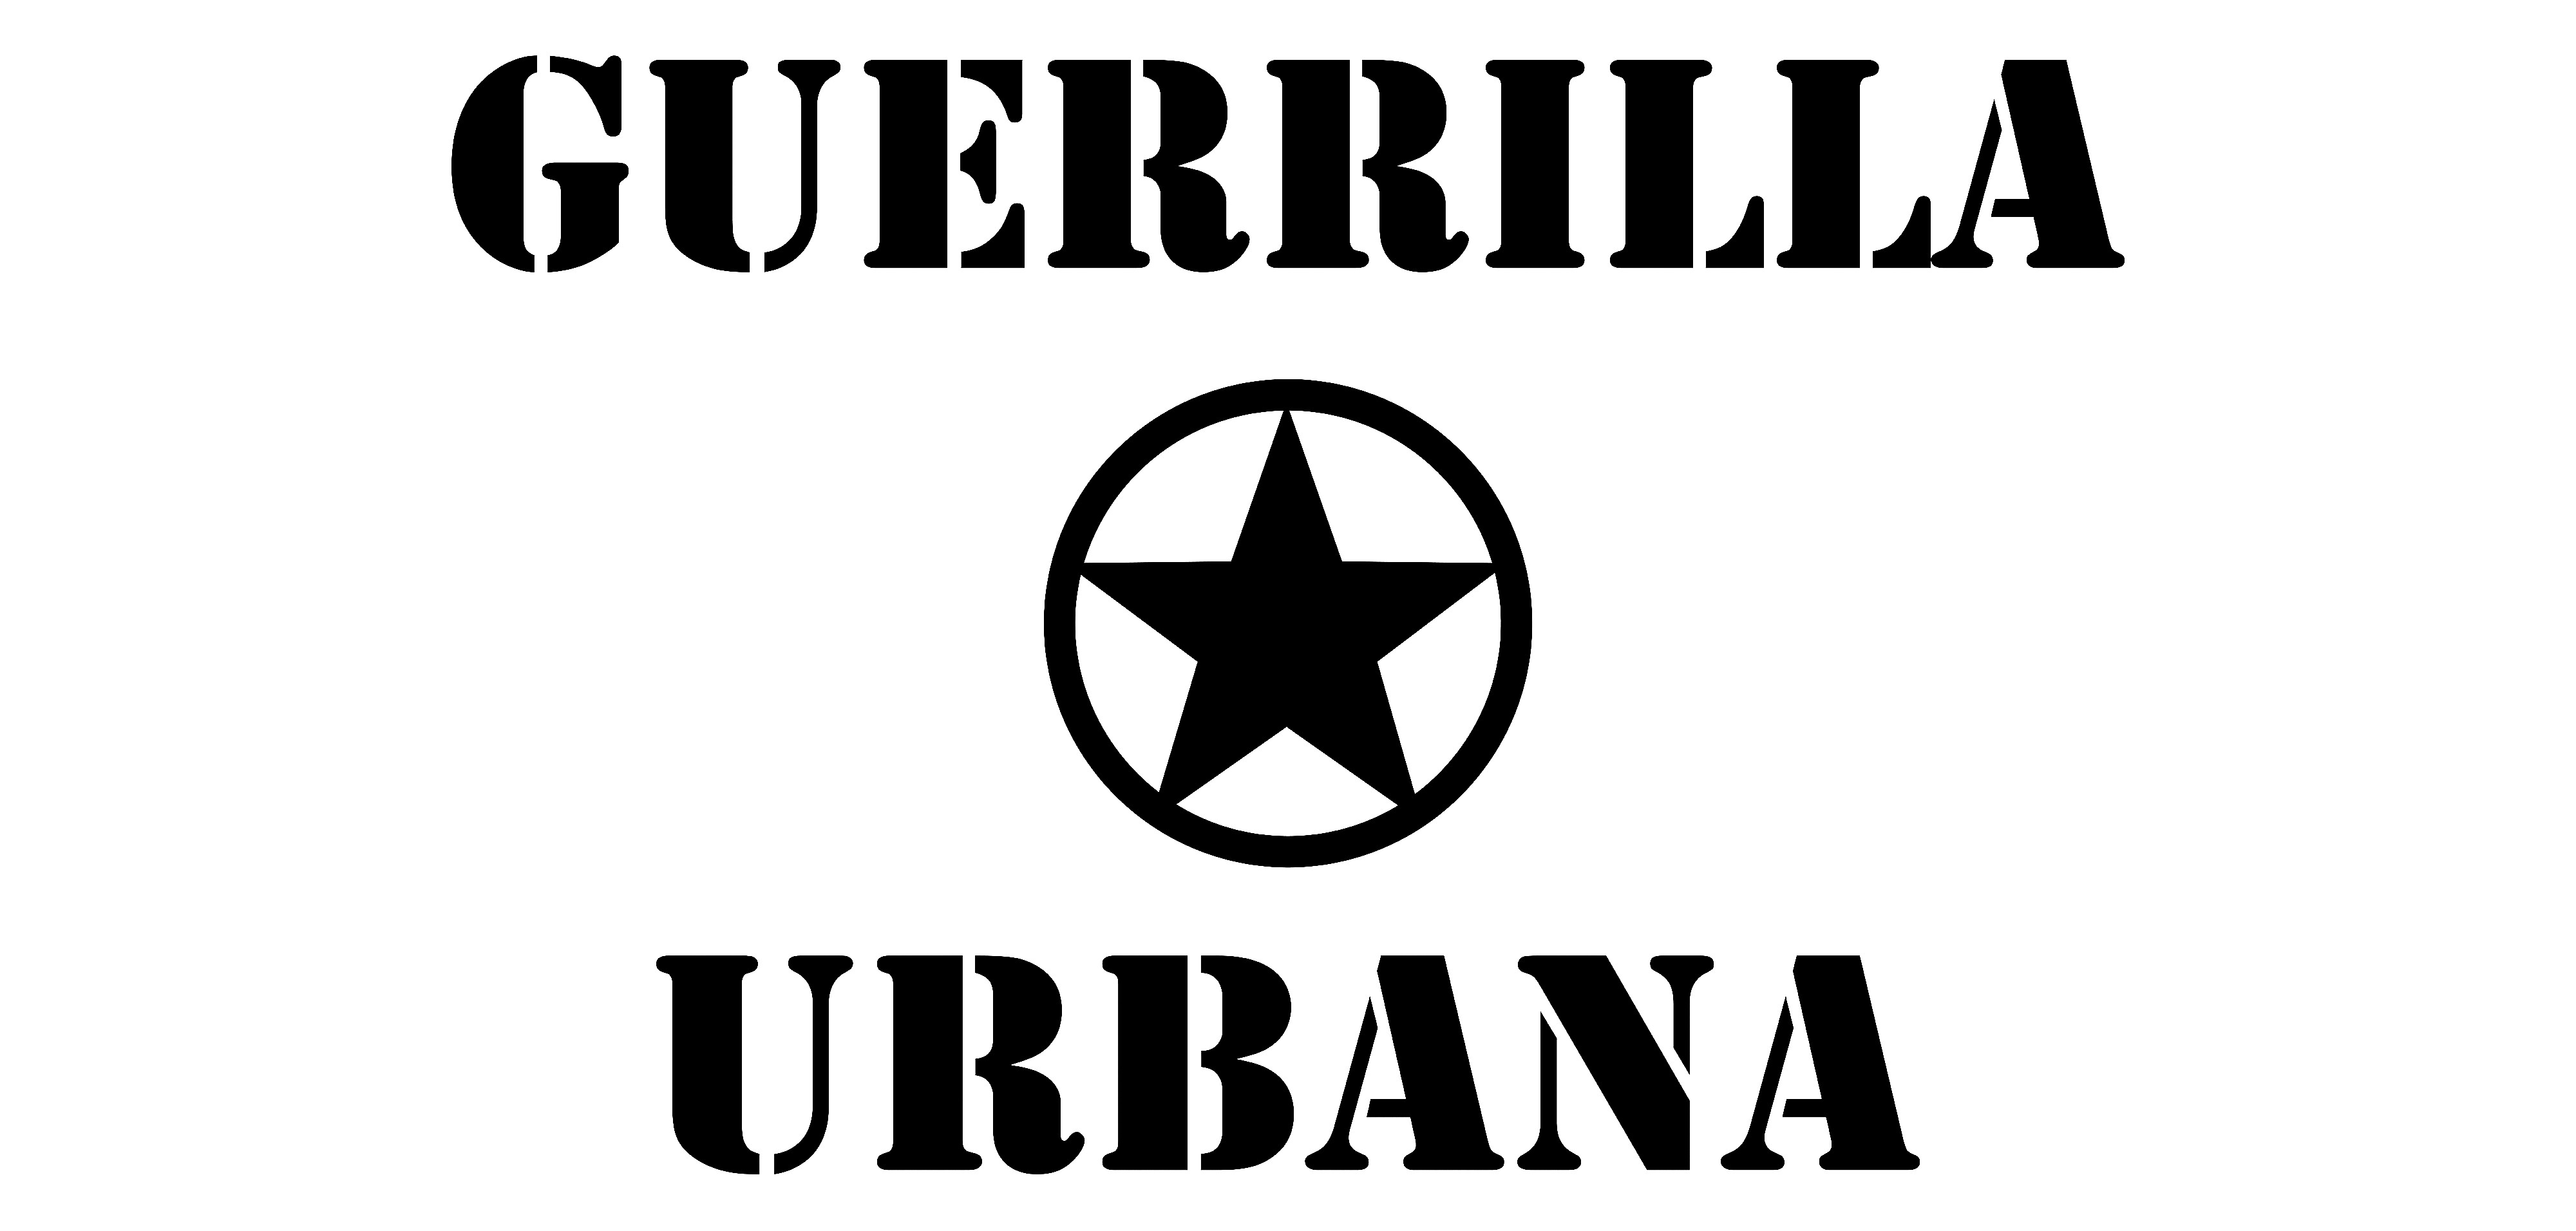 Guerrilla urbana